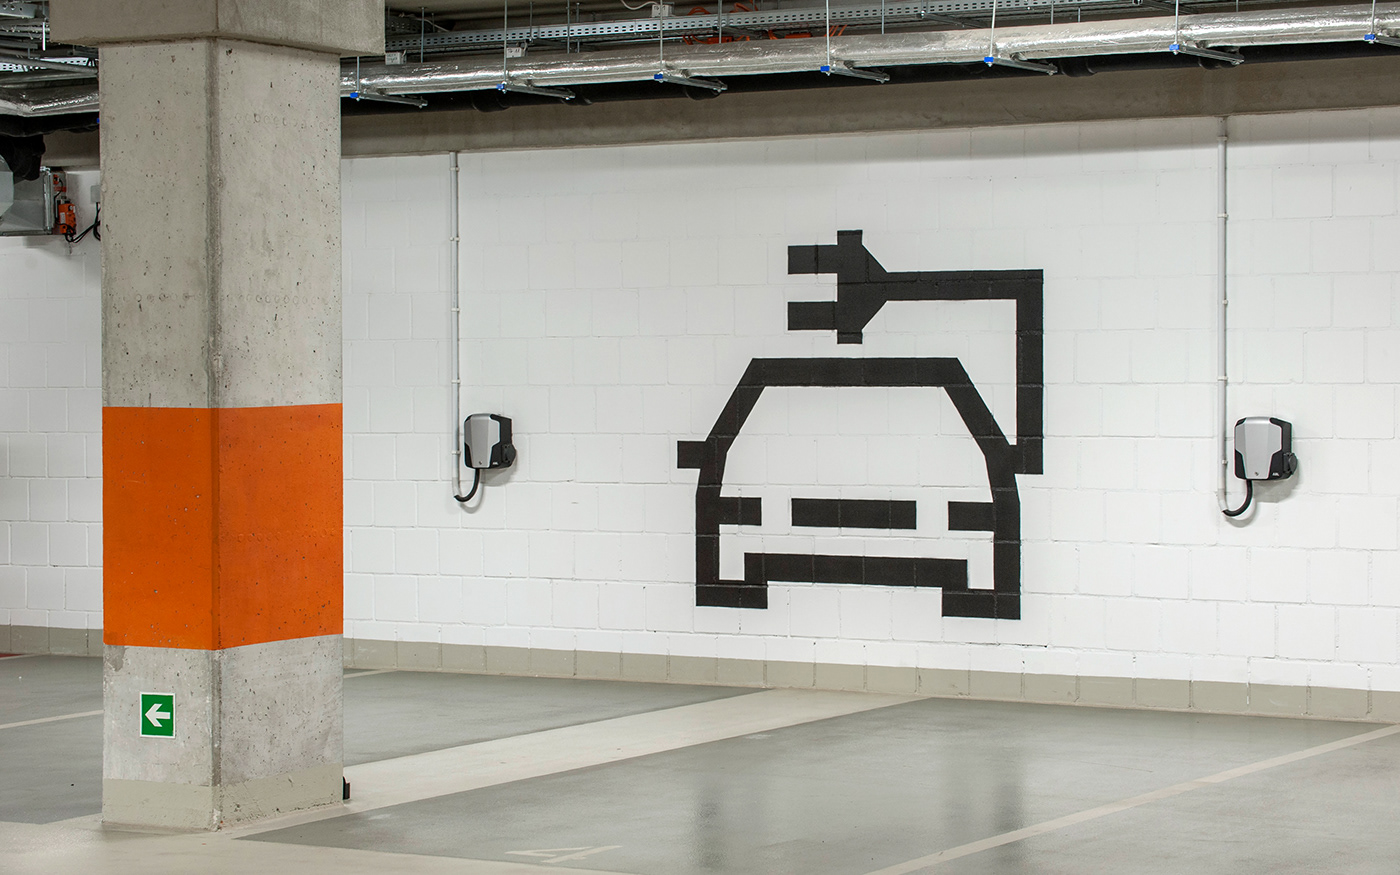 Office pictograms pictogram wayfinding elevator parking toilet łódź poland igor szwach